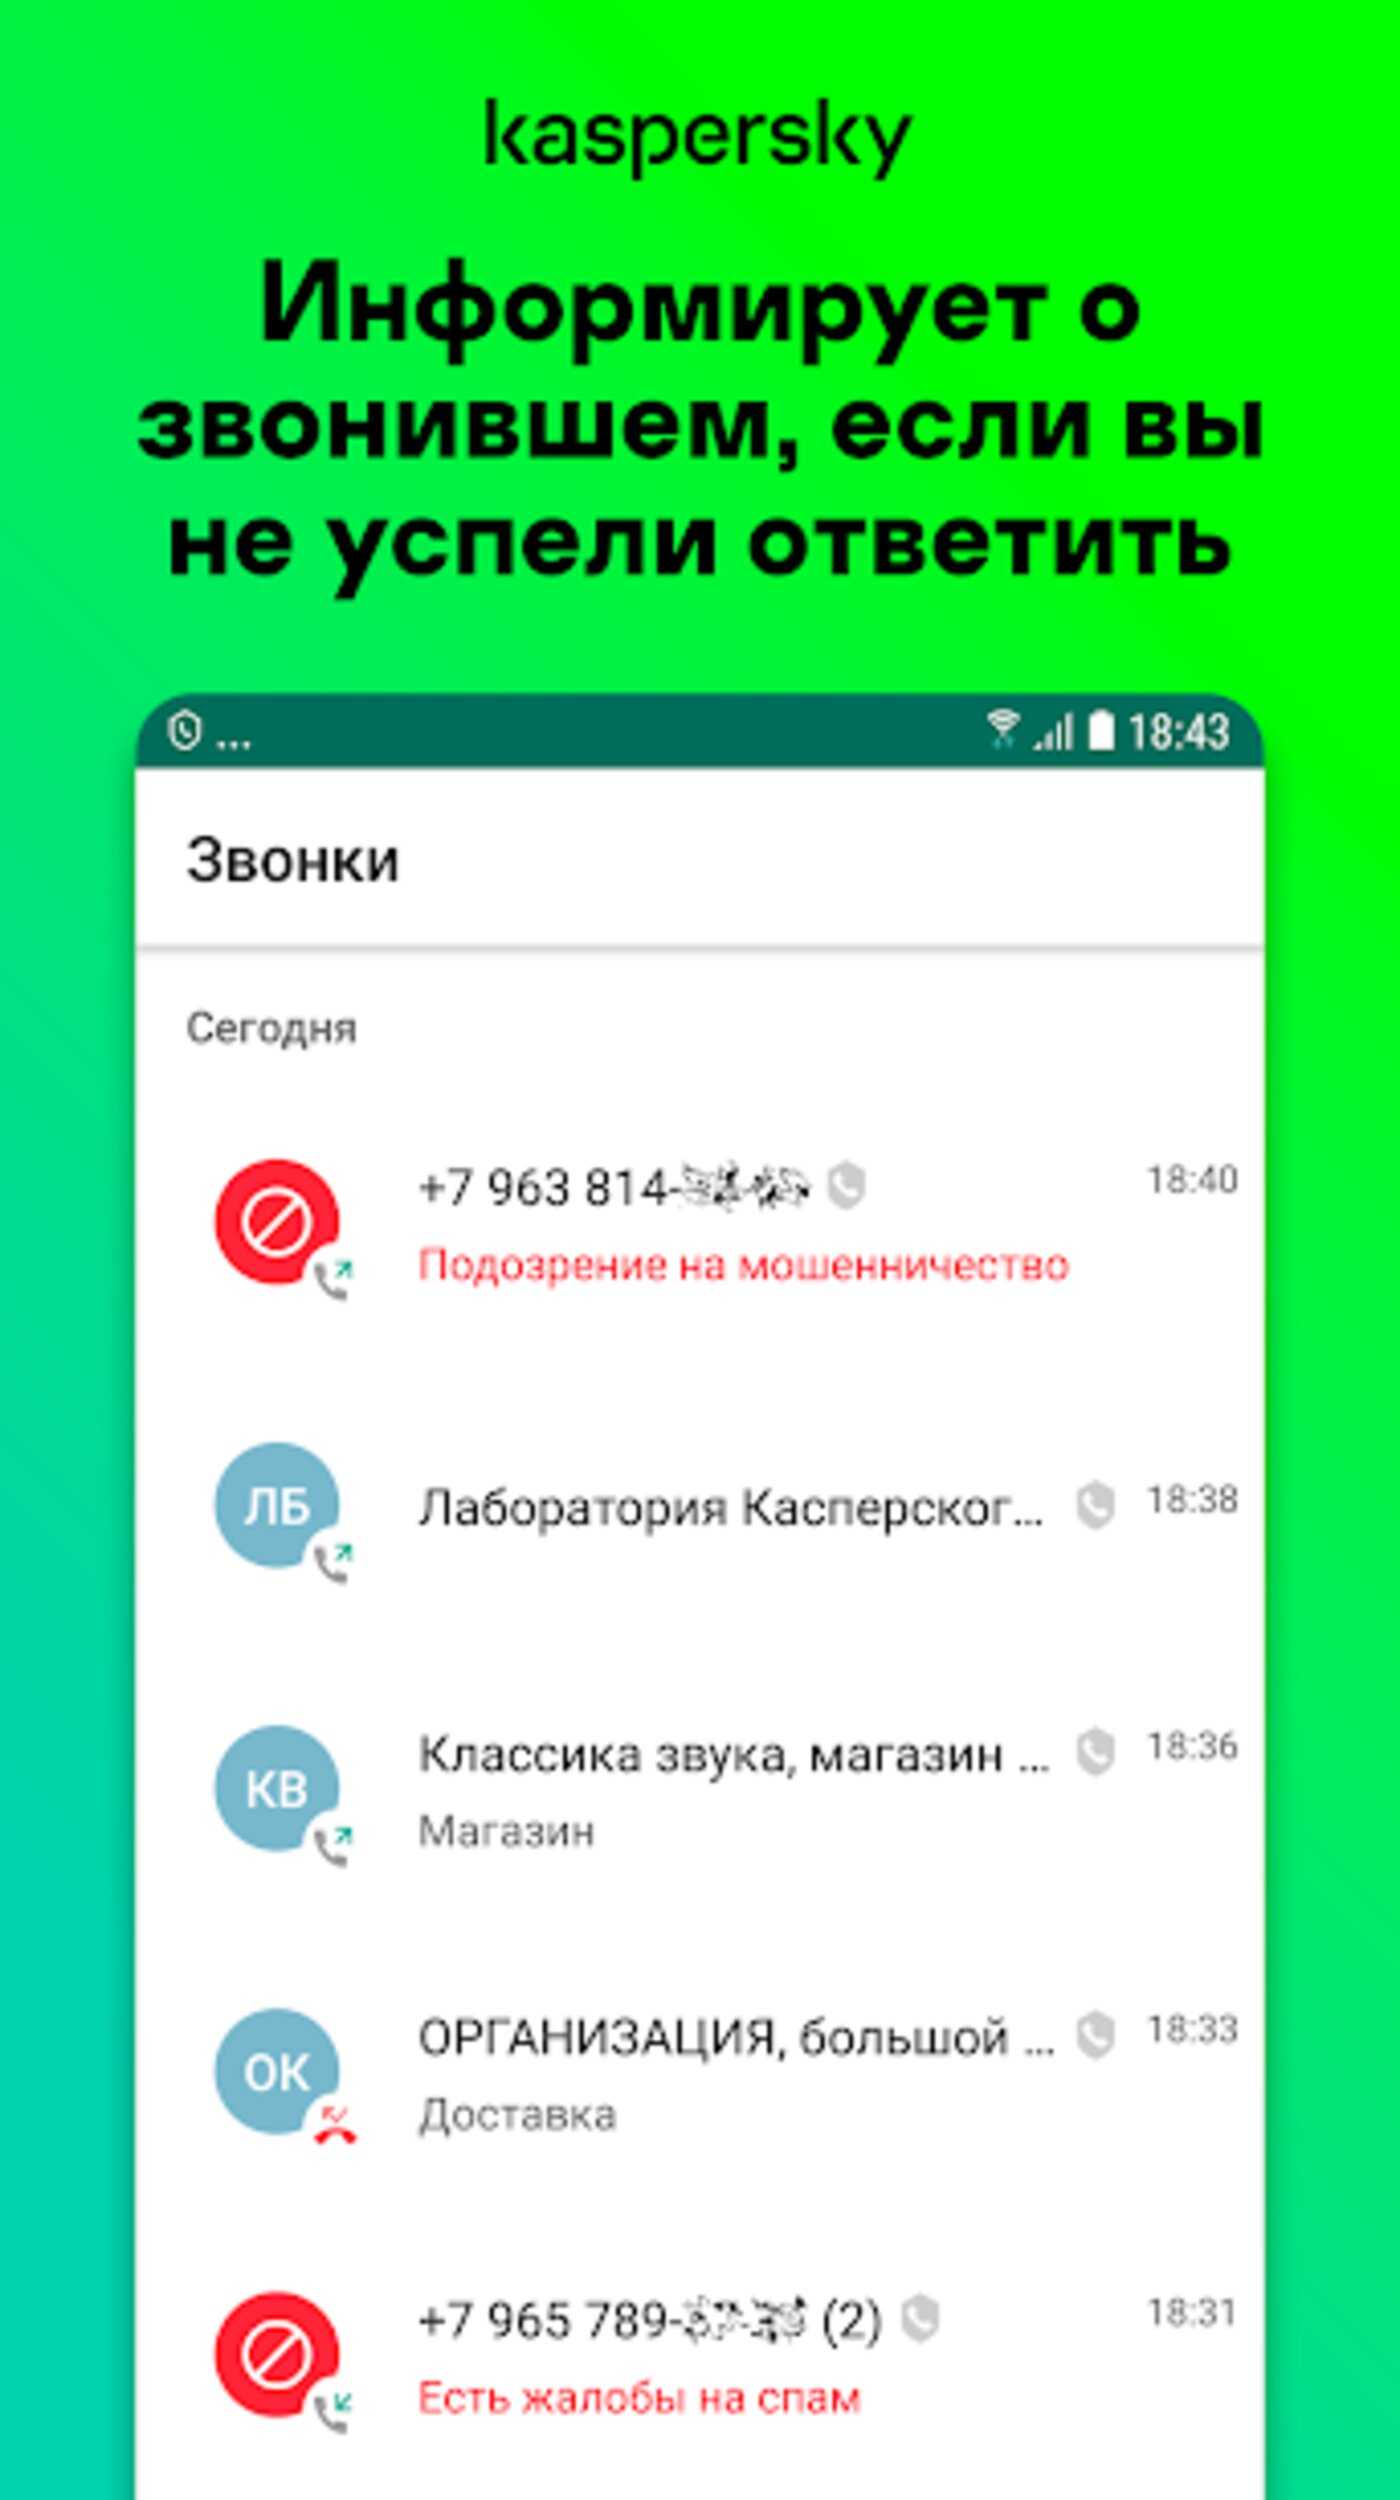 Kaspersky Who Calls v1.24.0.88 (Premium) (Unlocked) APK